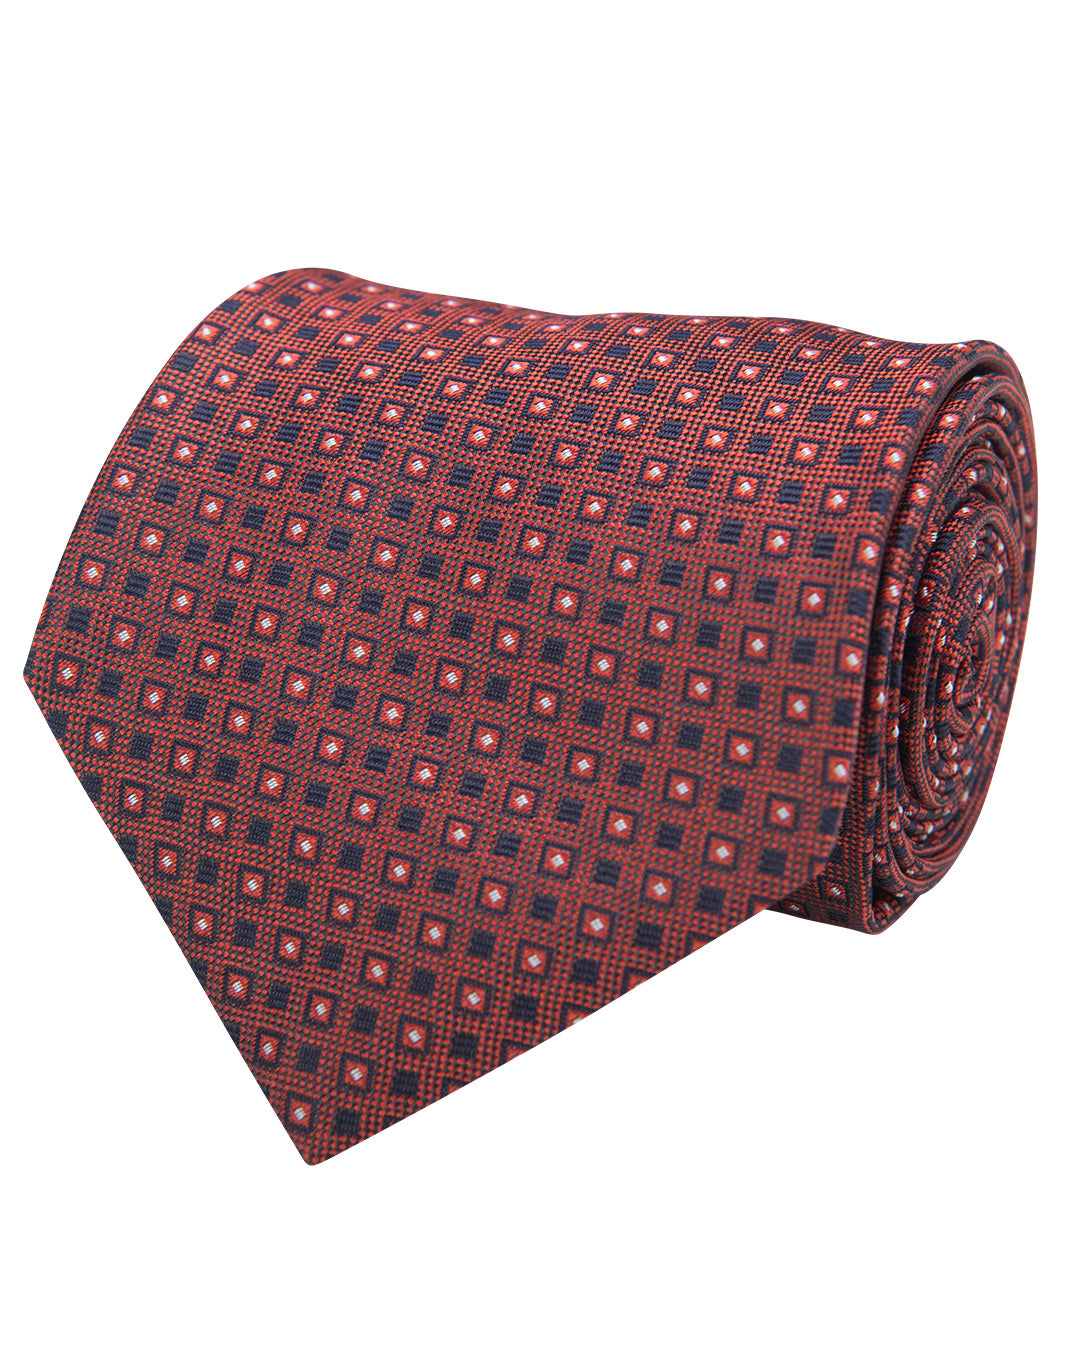 Red Box Motif Oxford Weave Italian Silk Tie